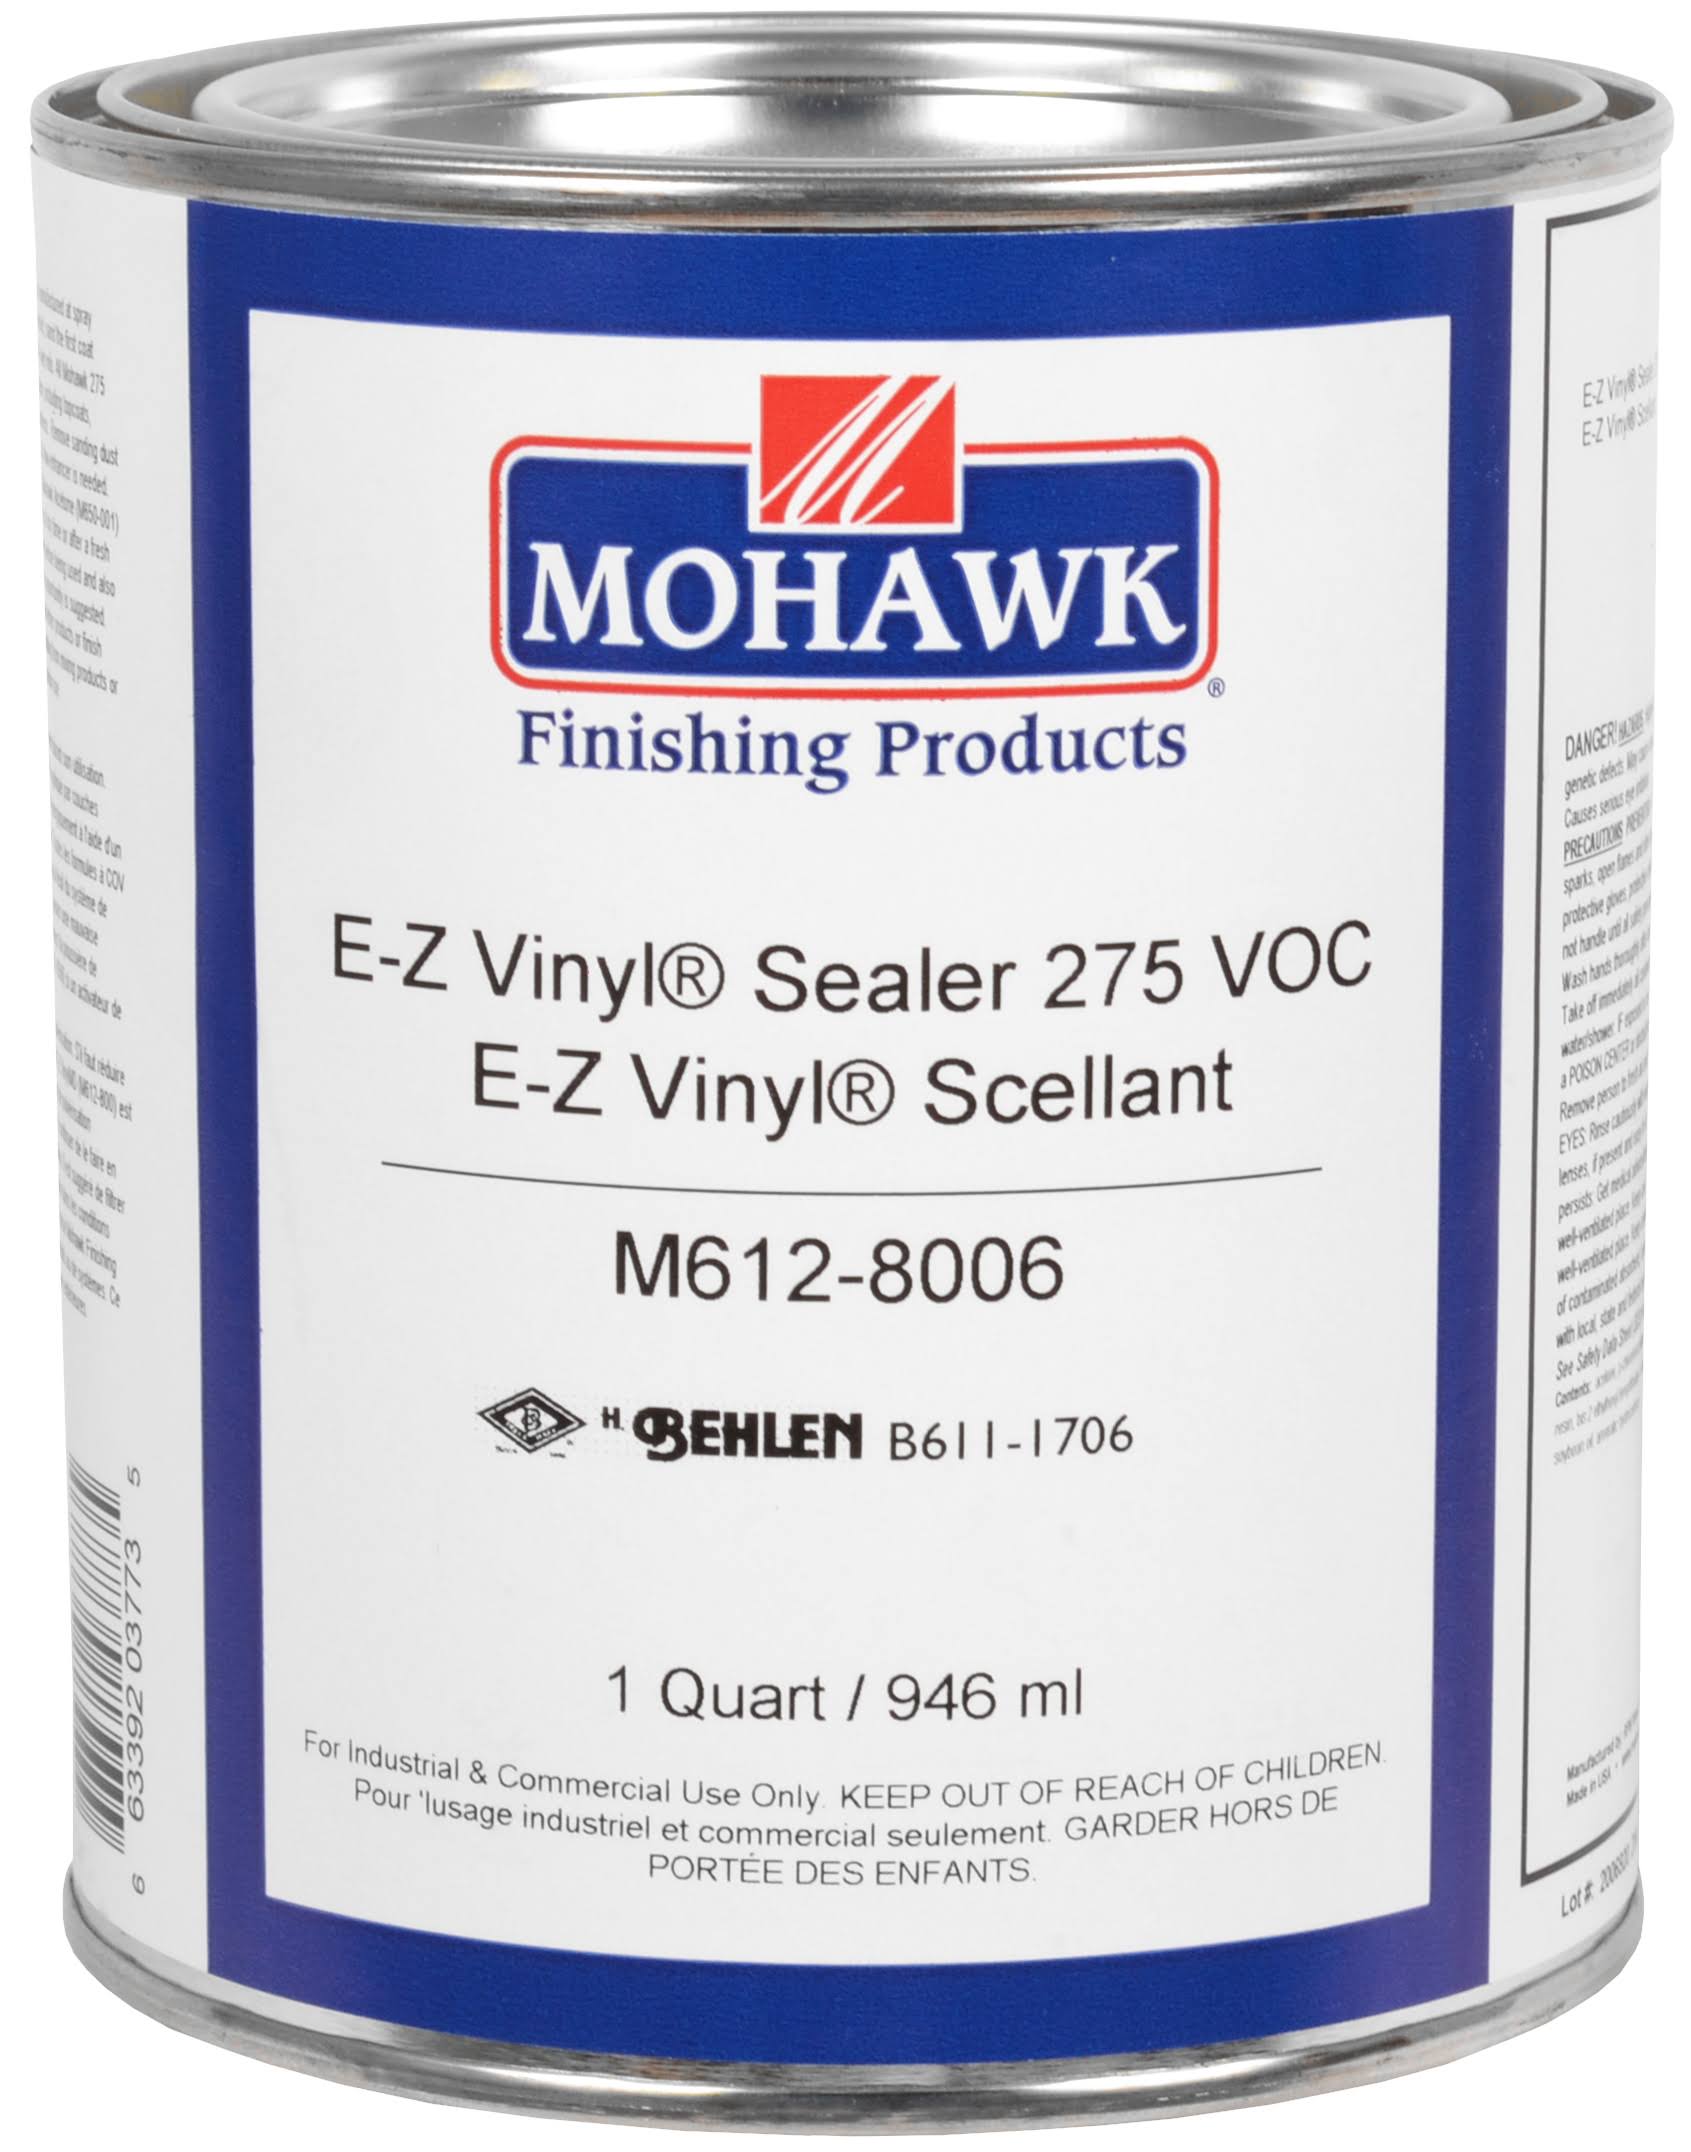 Mohawk E-Z Vinyl Clear Sealer 275 VOC - Gallon